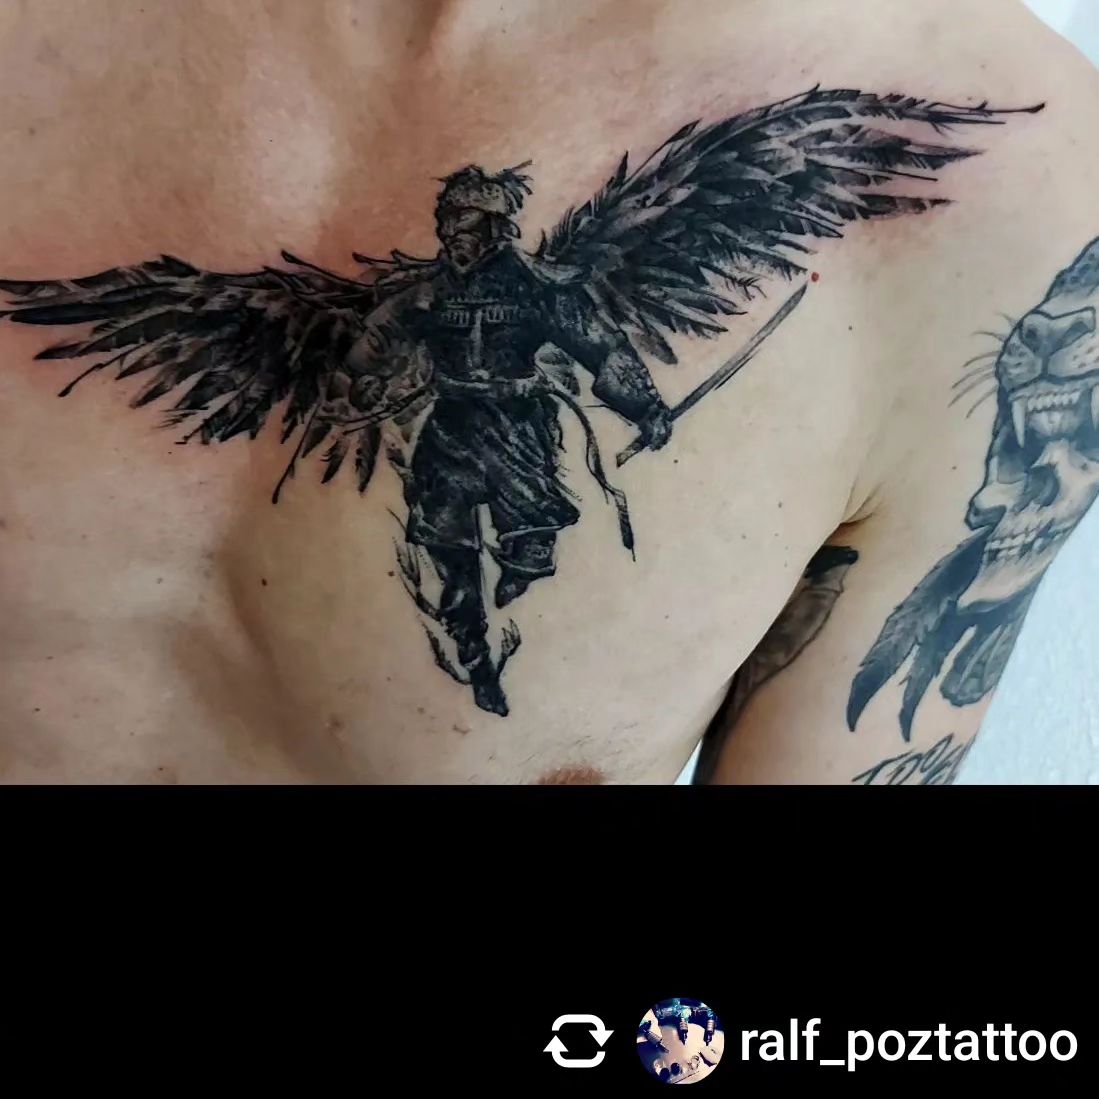 Tattoo von @ralf_poztattoo

In progress, Danke @anti_oxy_dancy

#freywerk #freyw